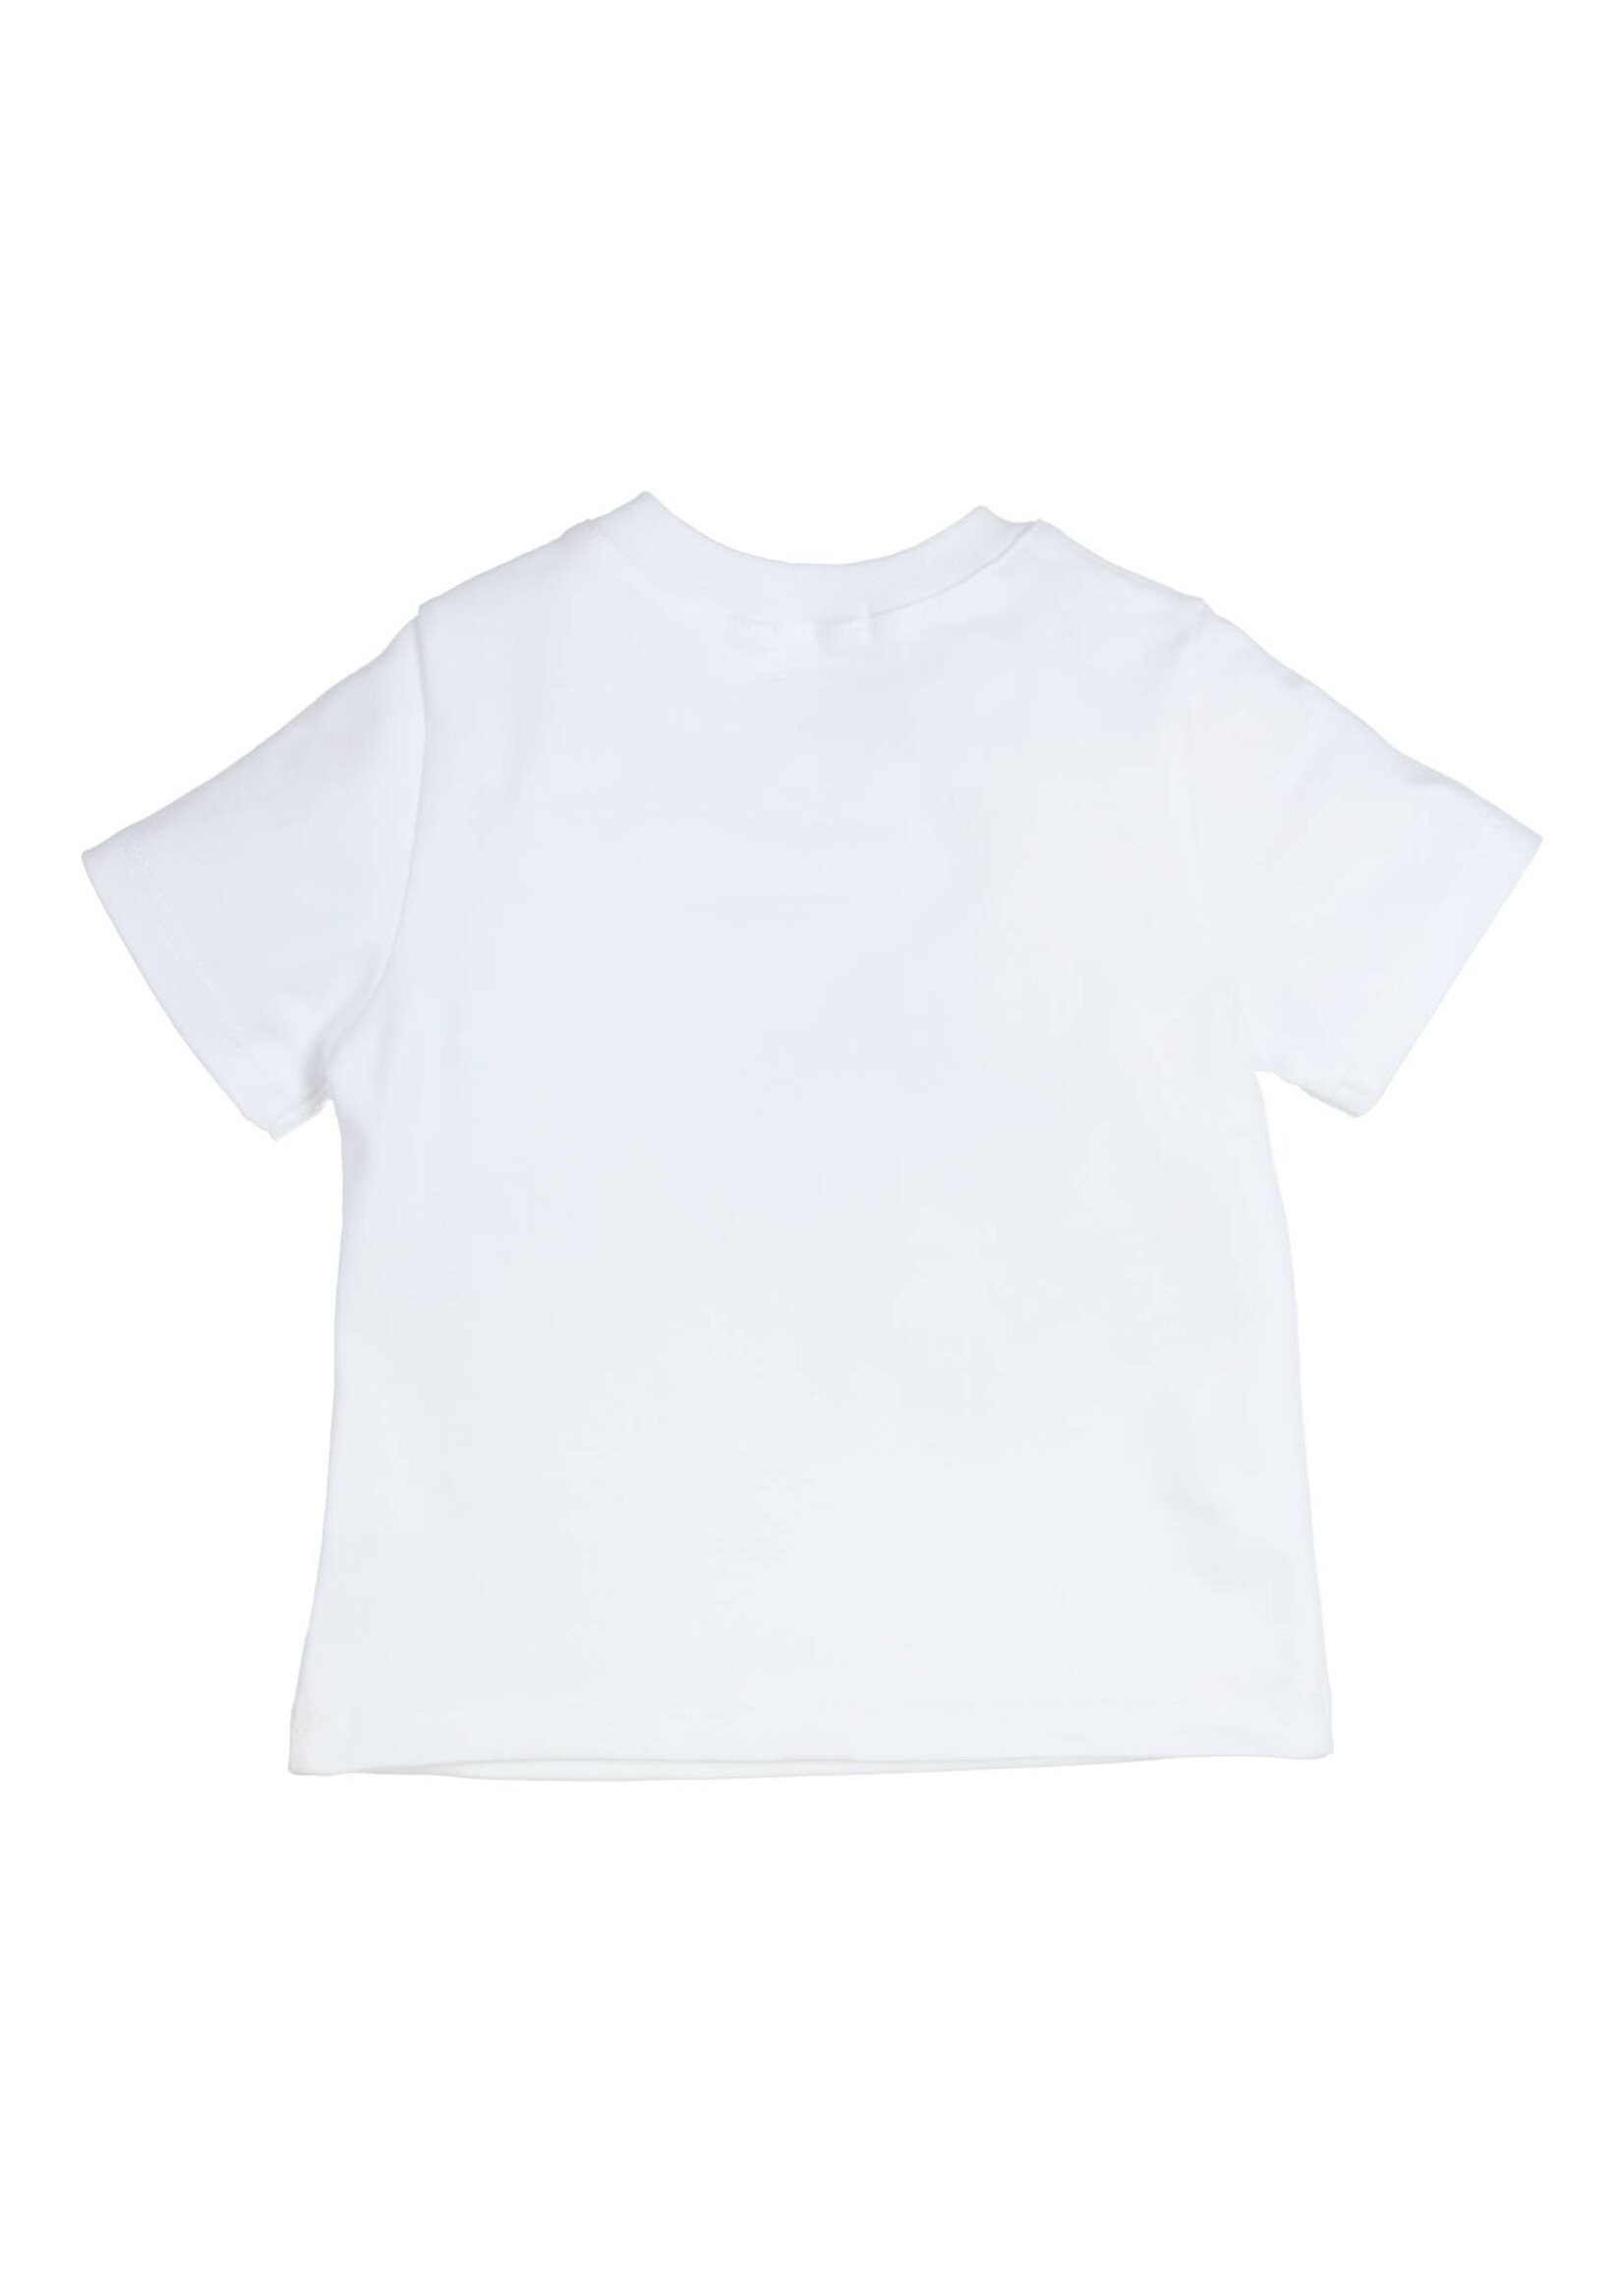 Gymp Boys T-shirt Aerobic Let's go racing 353-4441-20 White